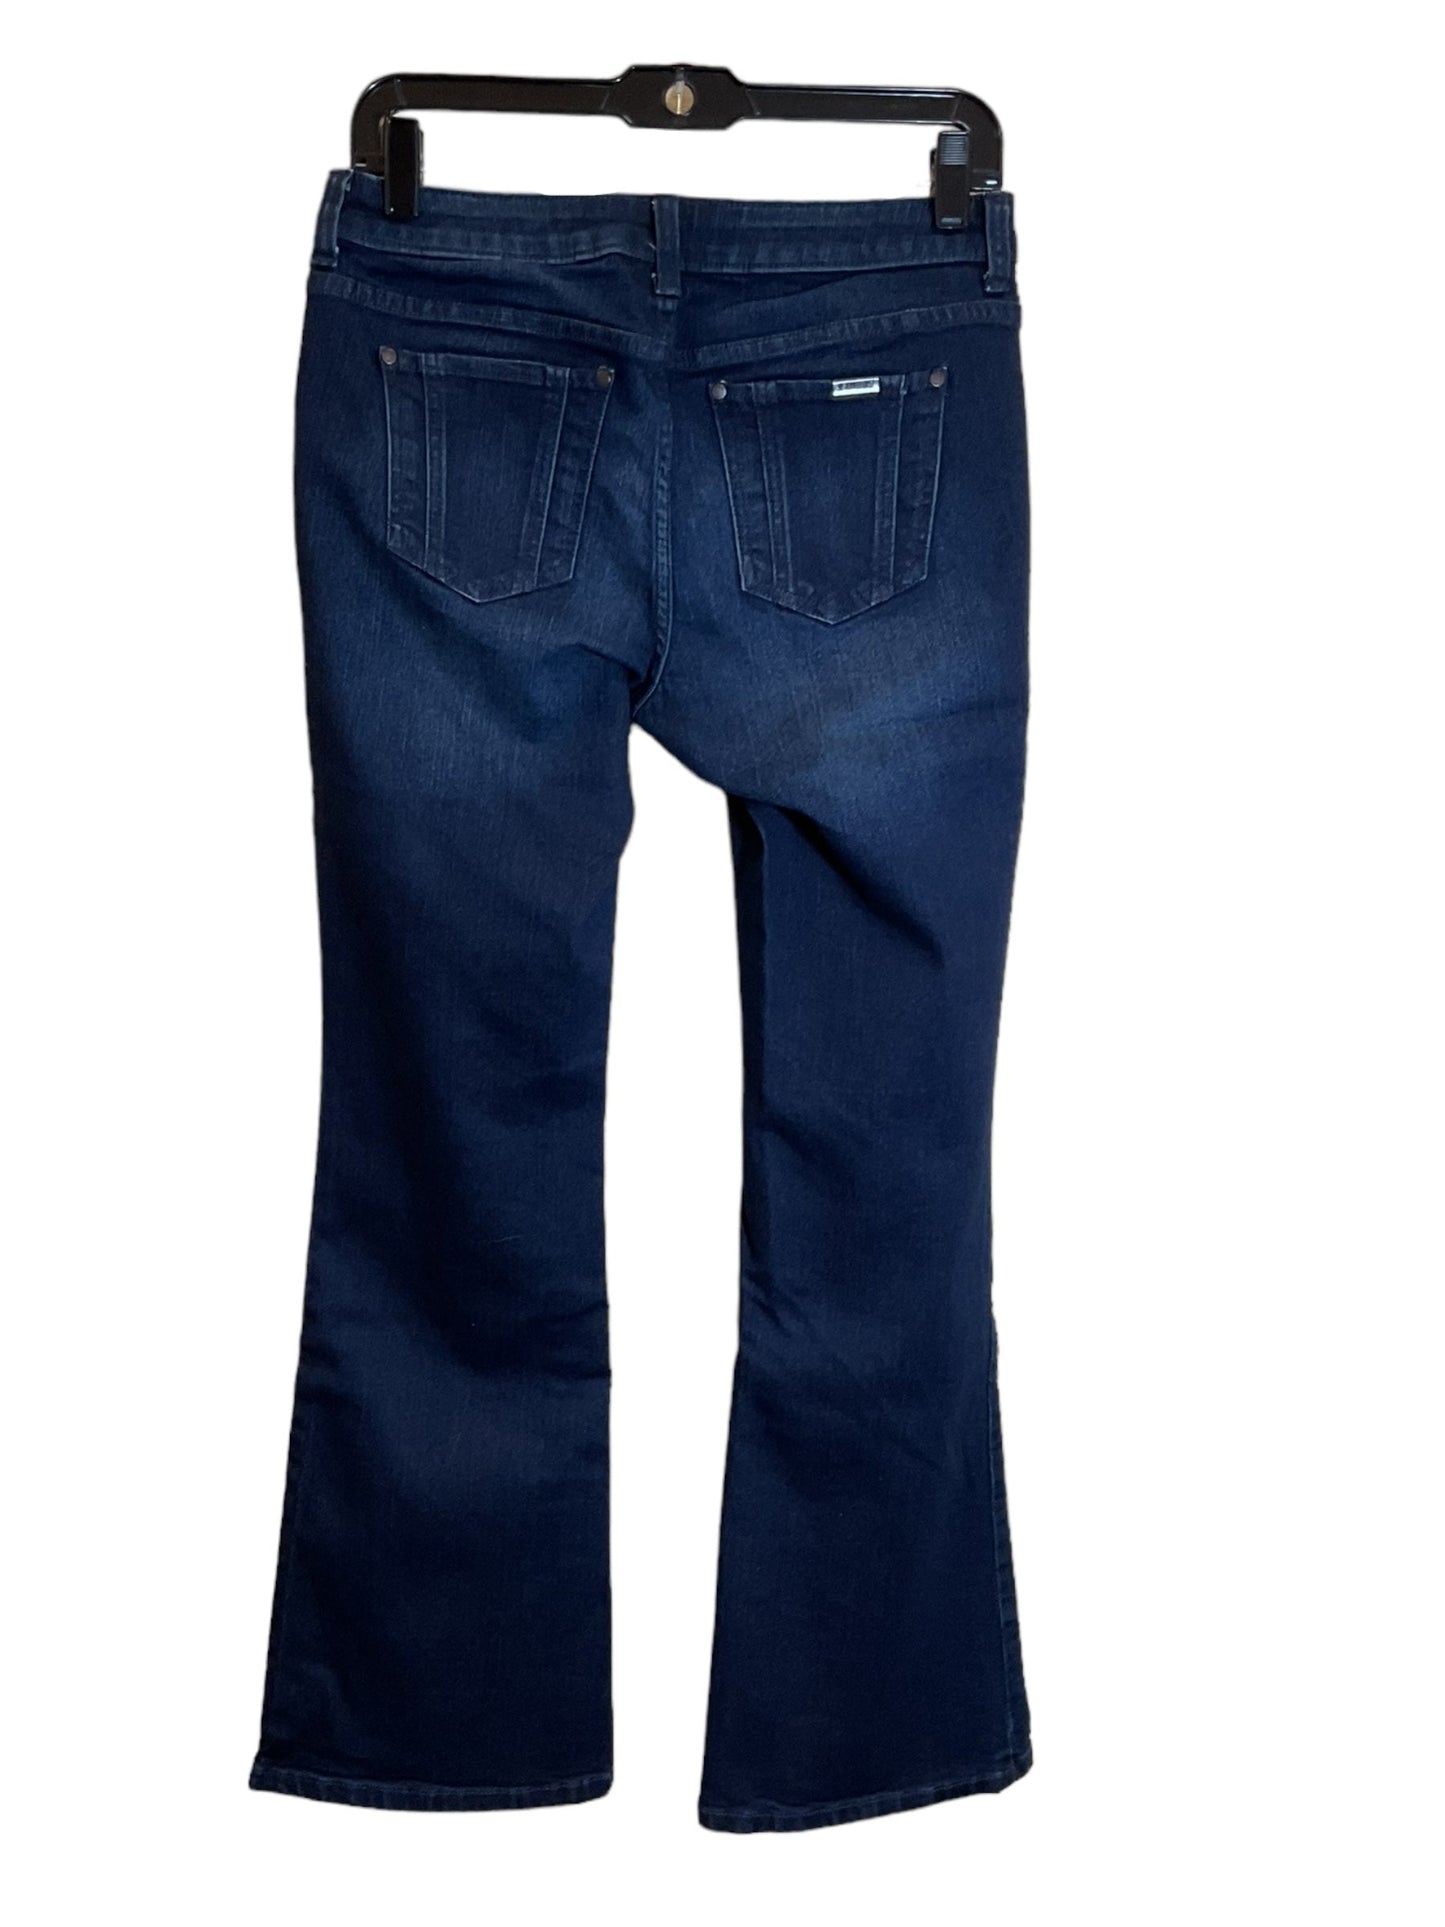 Jeans Boot Cut By Jennifer Lopez  Size: 6